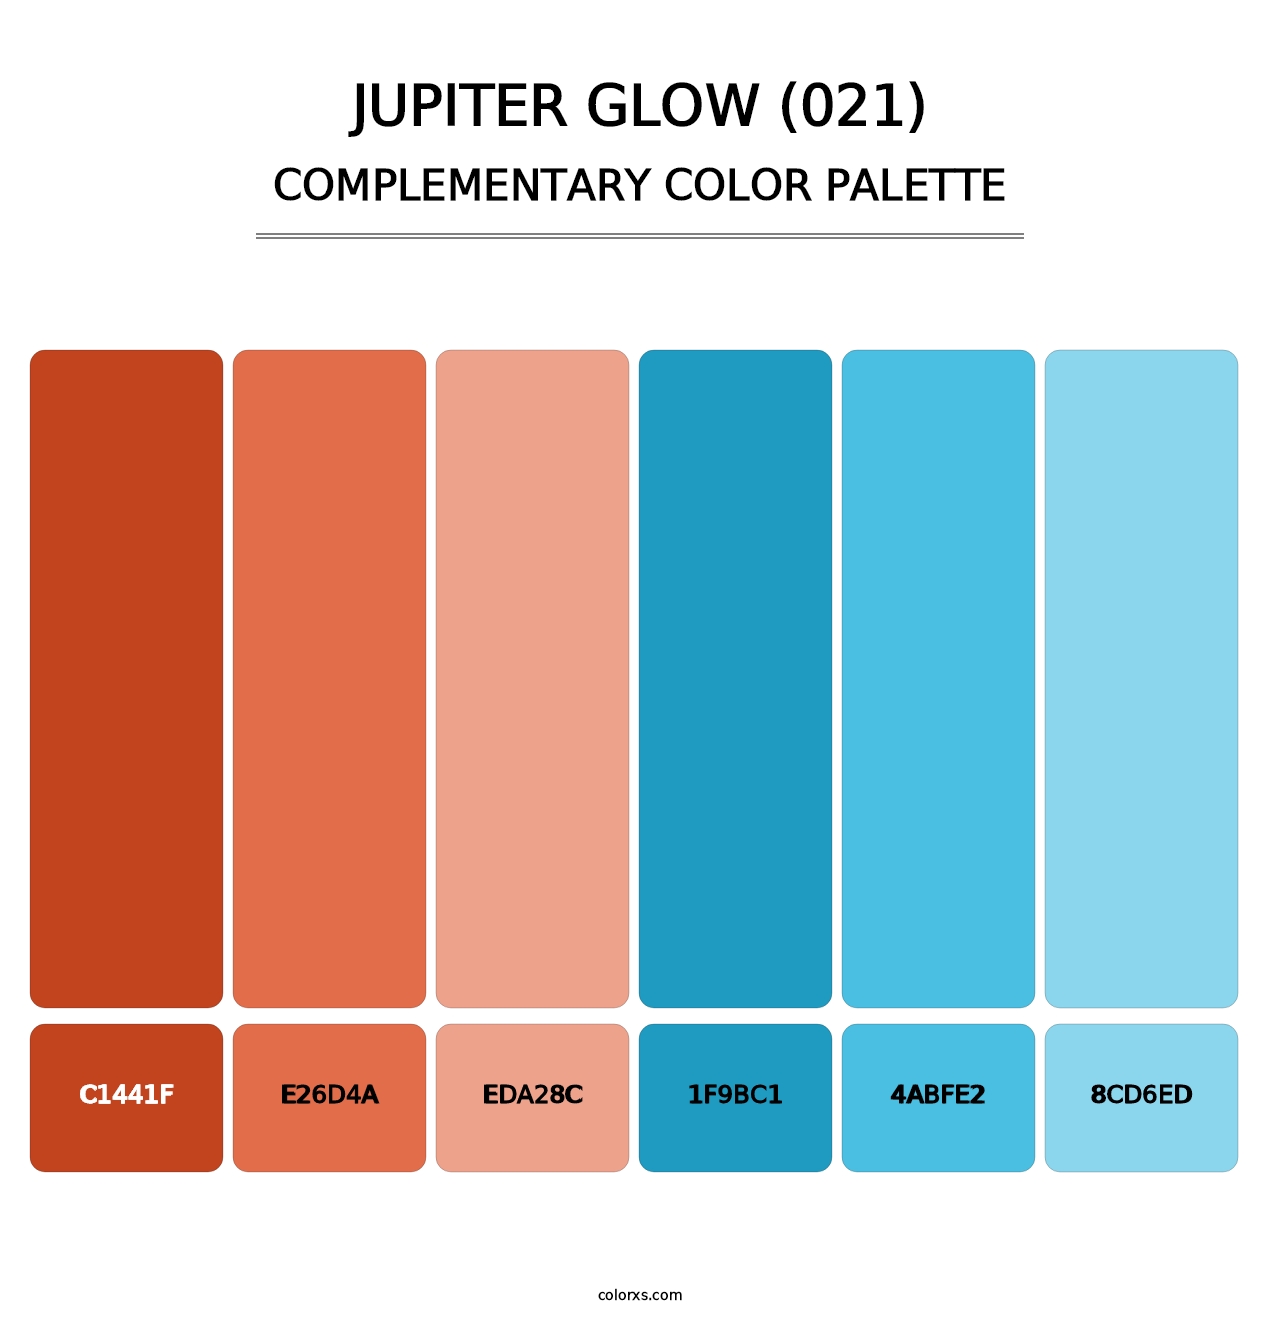 Jupiter Glow (021) - Complementary Color Palette